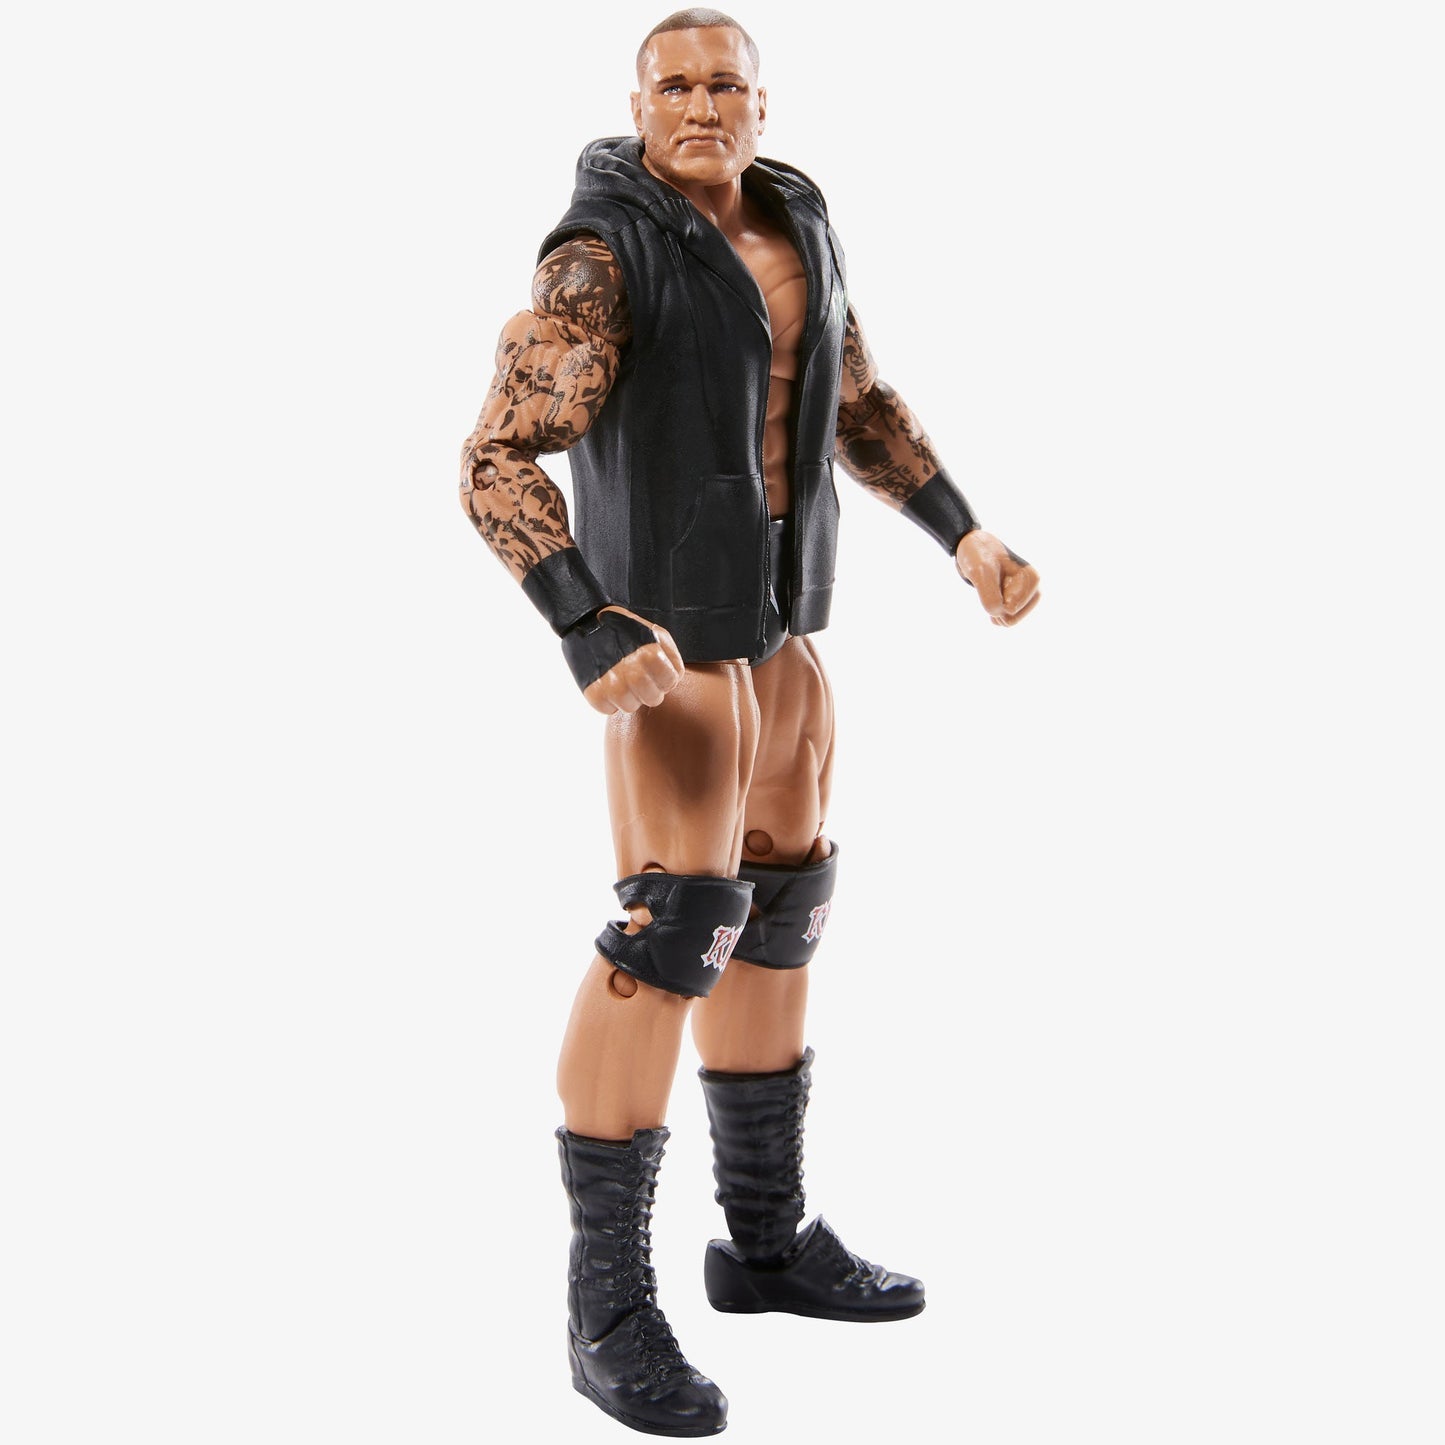 Randy Orton WWE Elite Collection Series #78